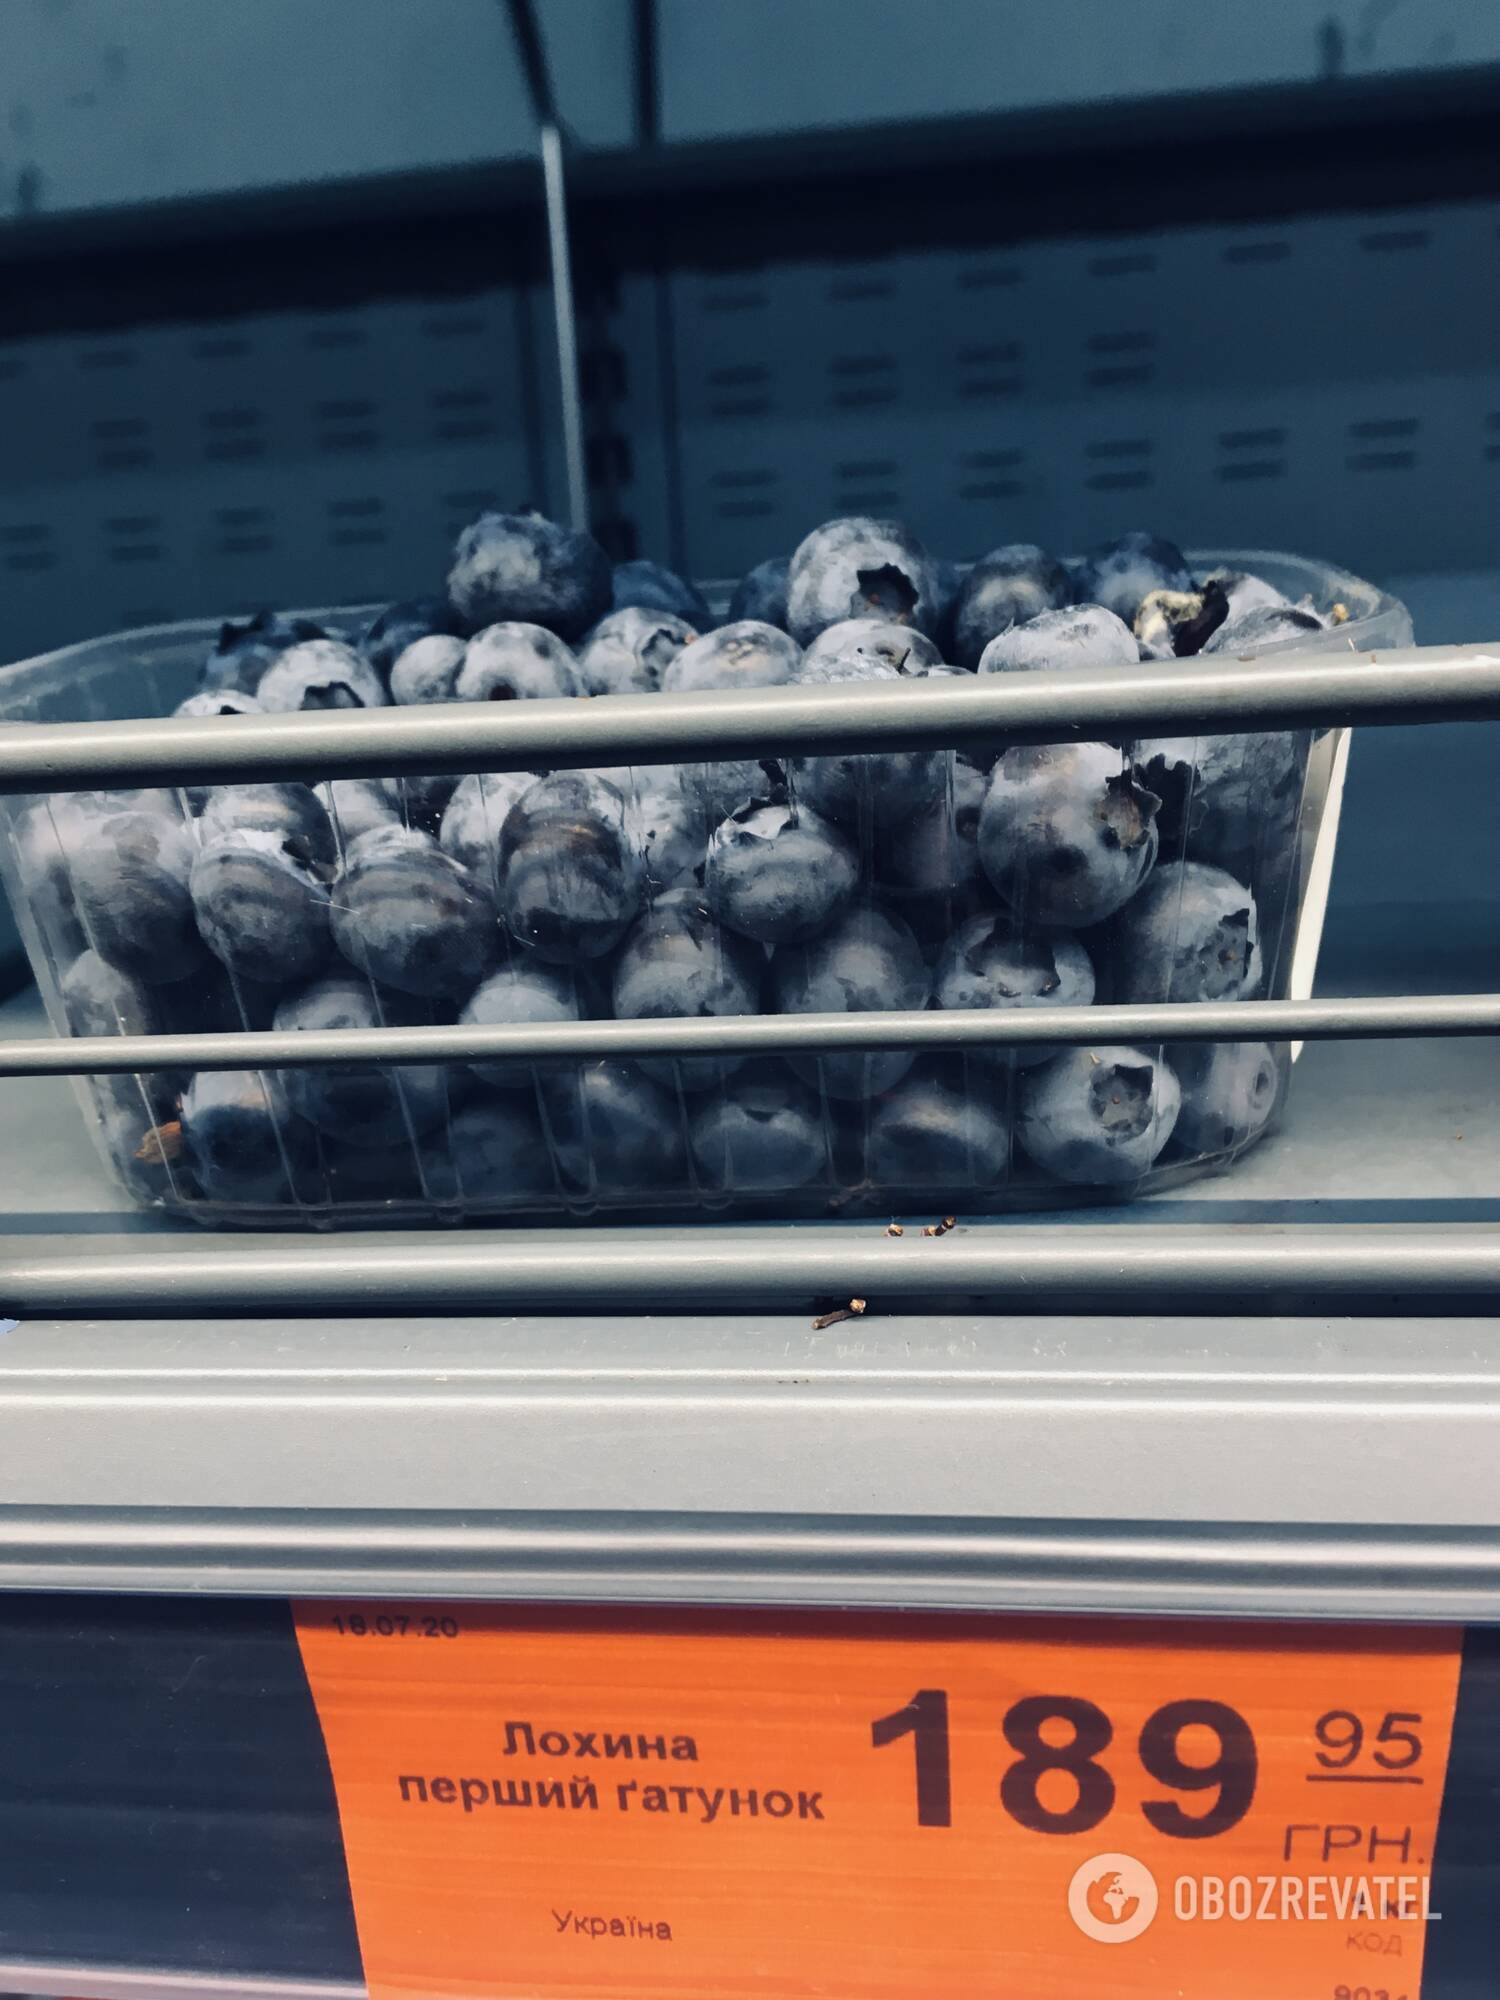 Цена на голубику в АТБ